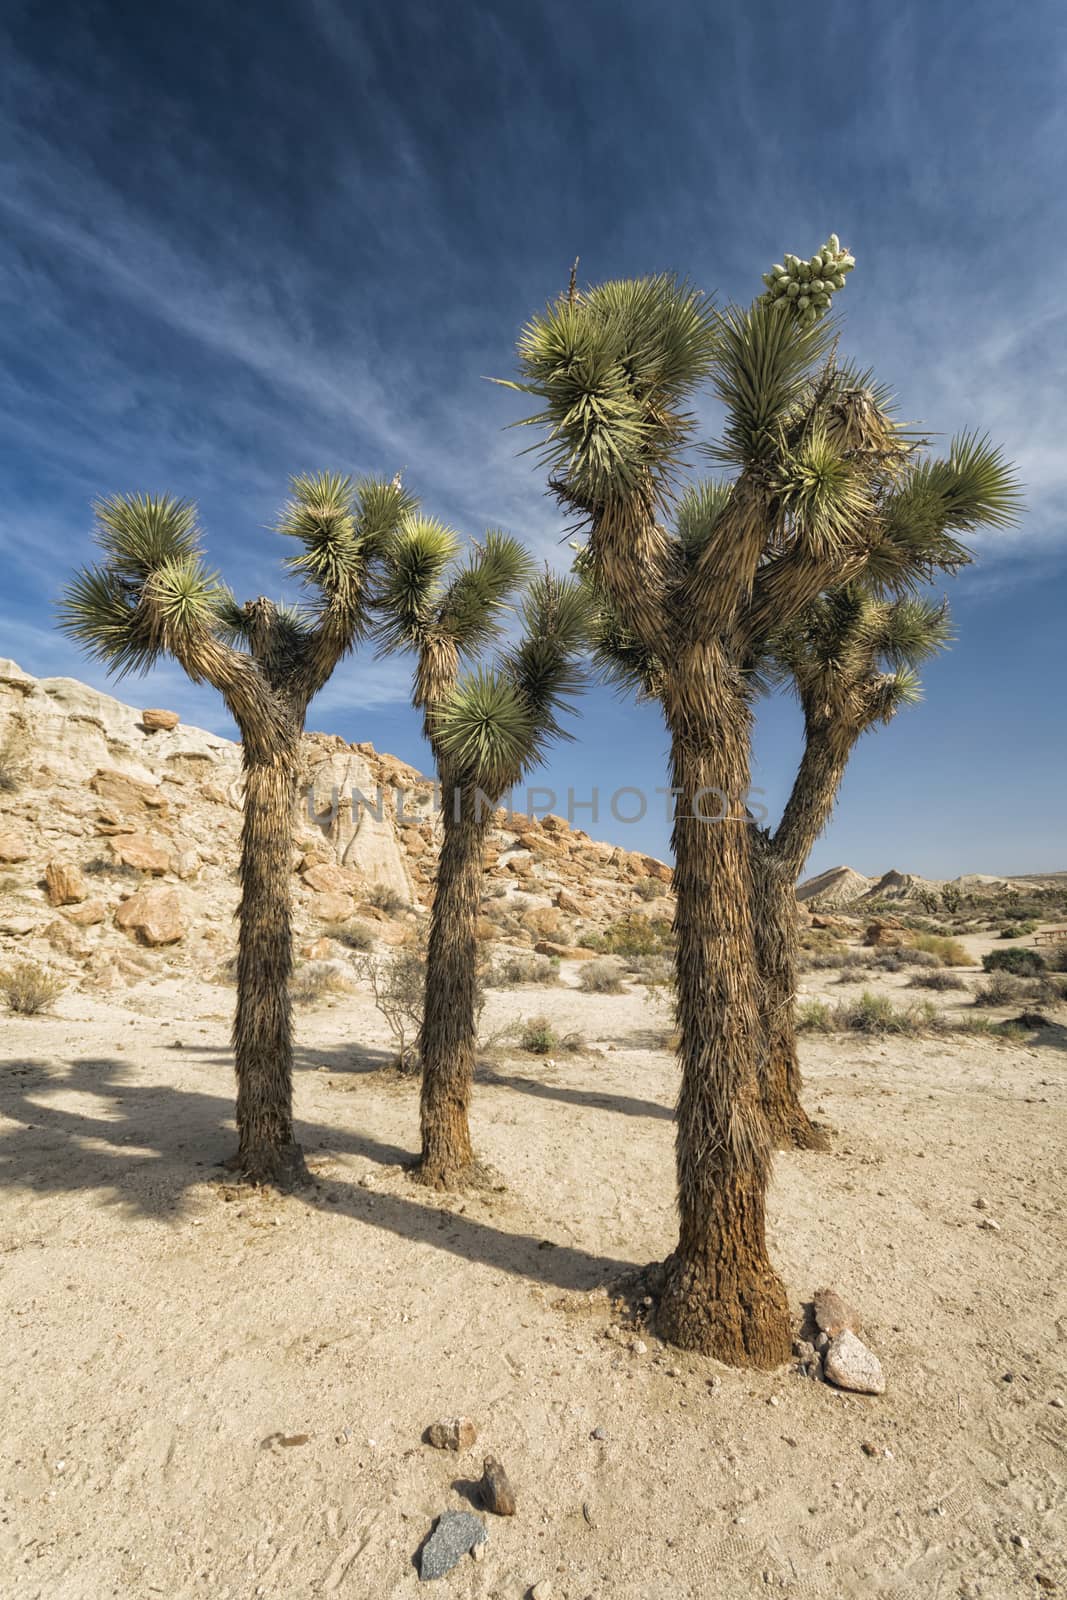 Joshua Trees in the Desert by patricklienin